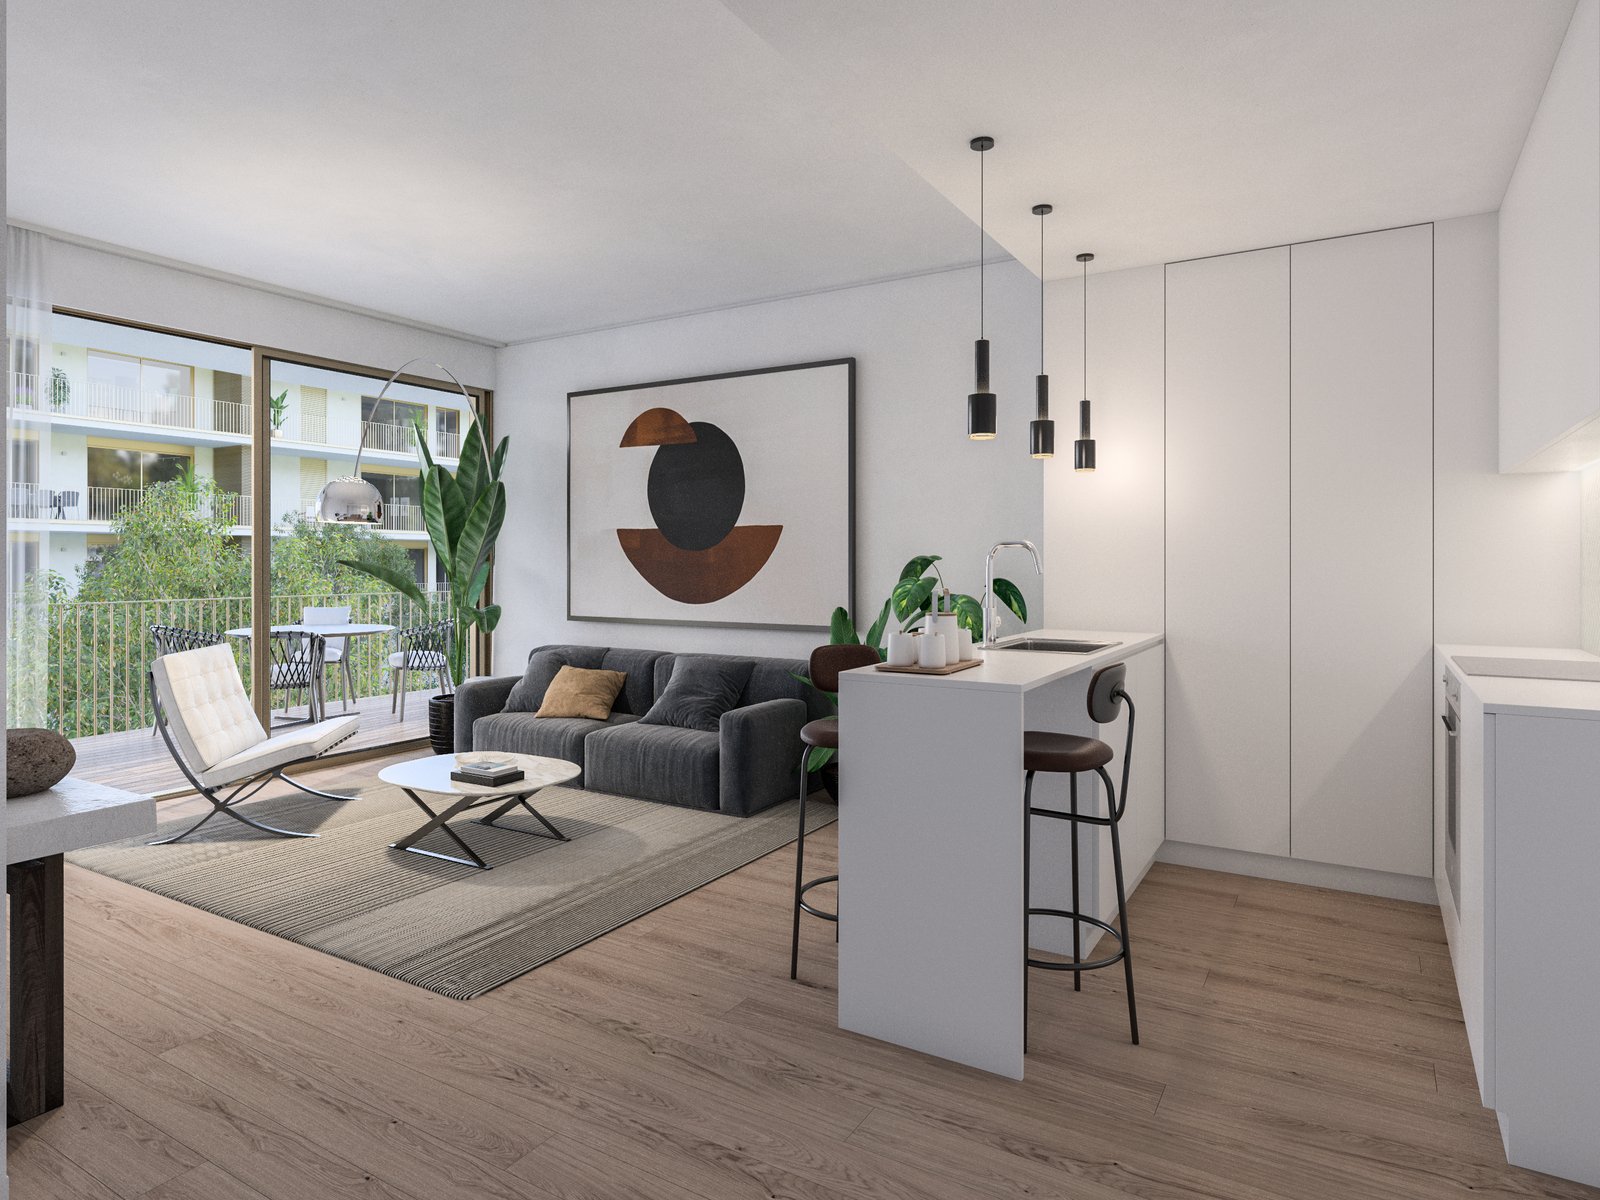 2 bedroom apartment with balcony in new development in Miraflores 4105912066